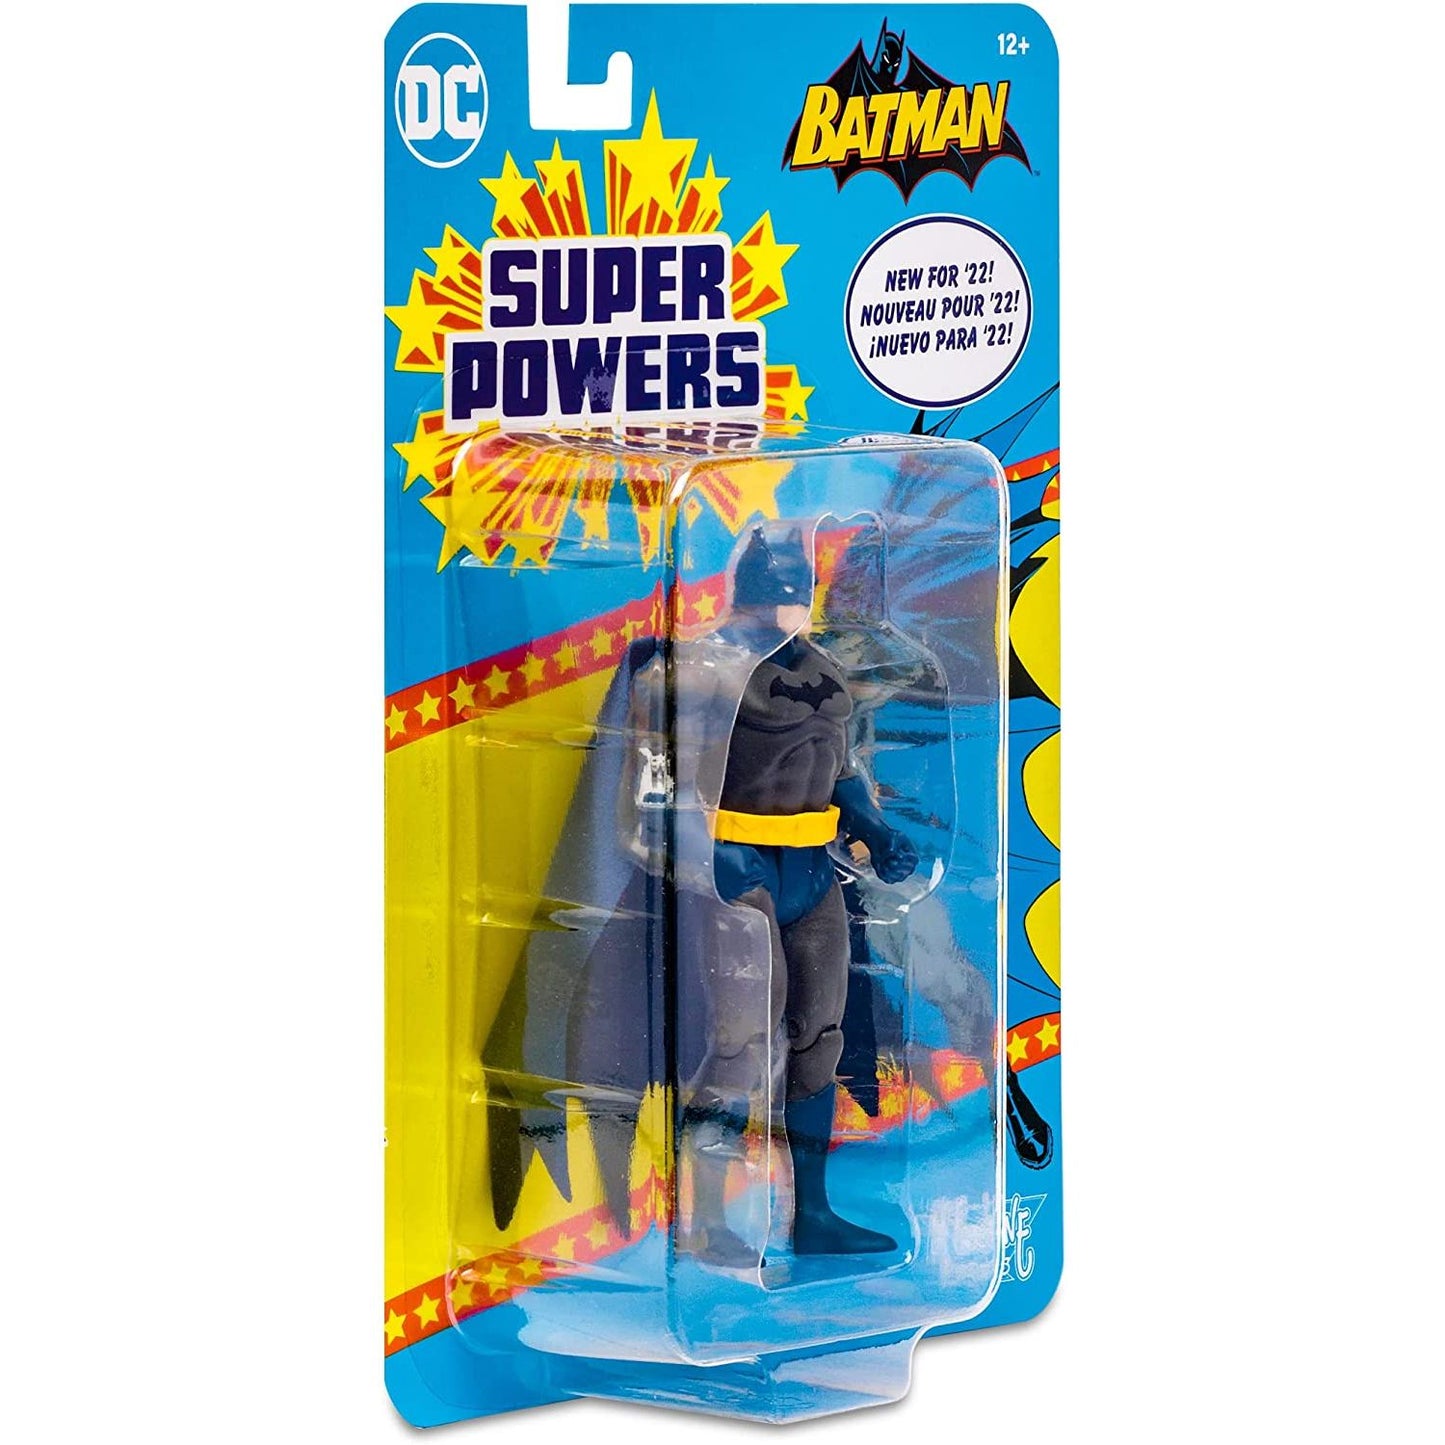 DC Direct - Super Powers - Hush Batman Figure back view - Heretoserveyou